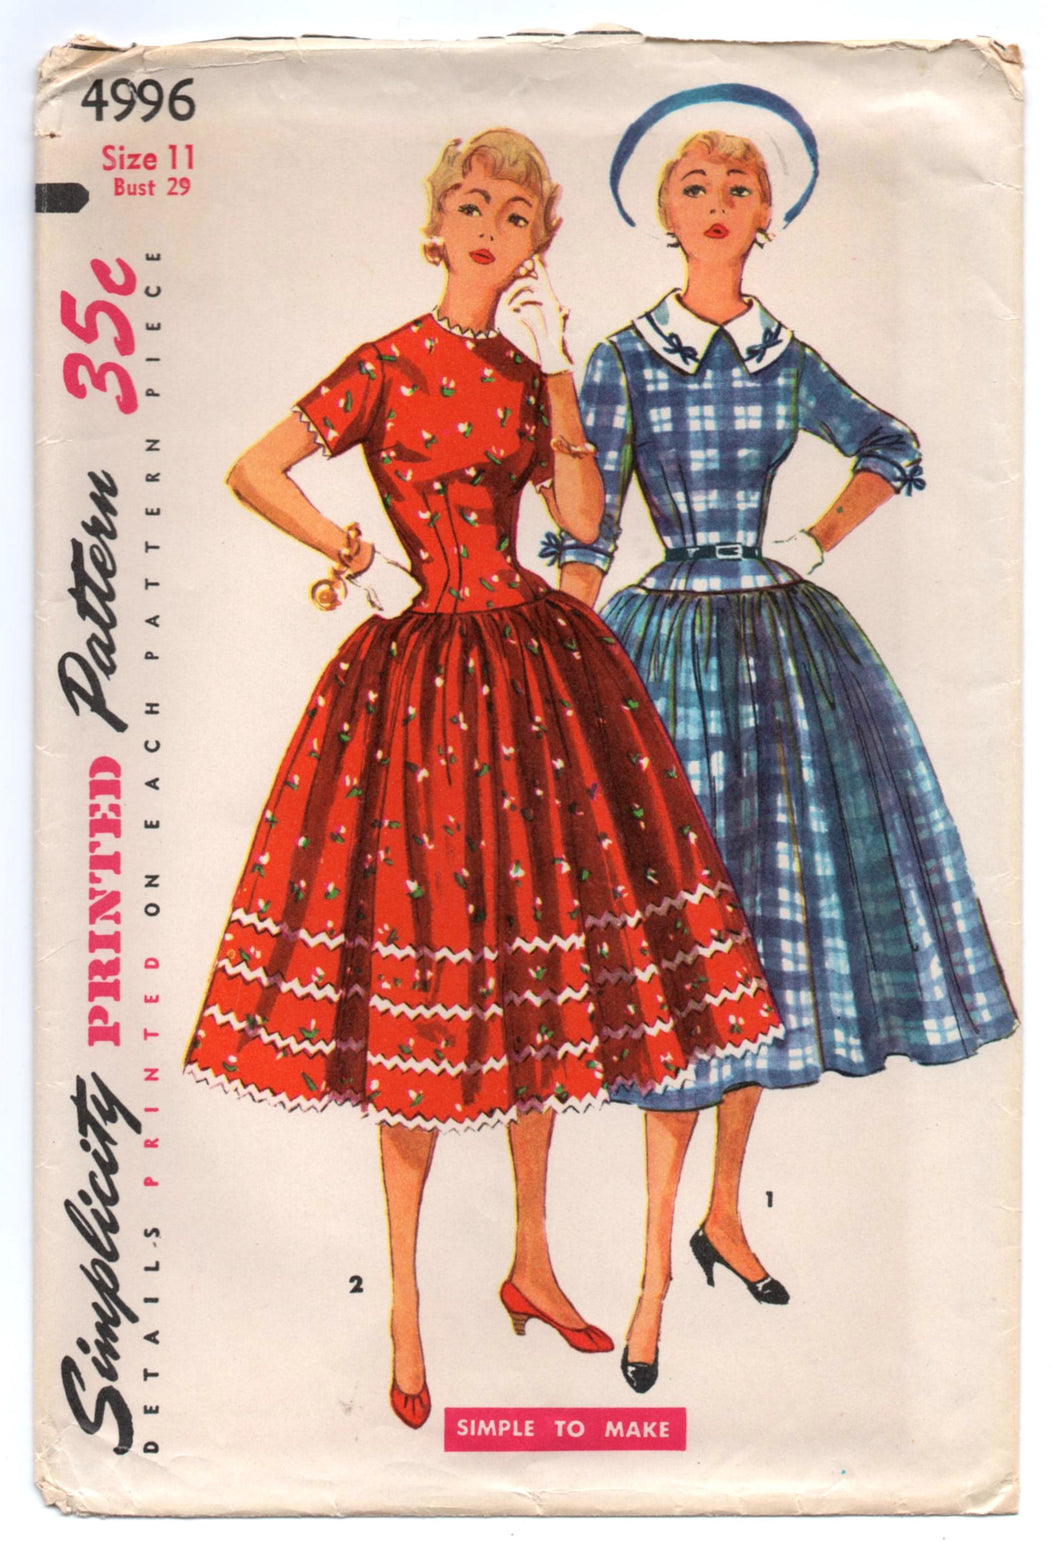 1950's Simplicity Rockabilly Dress with Drop Waist and Full Skirt pattern - Bust 29